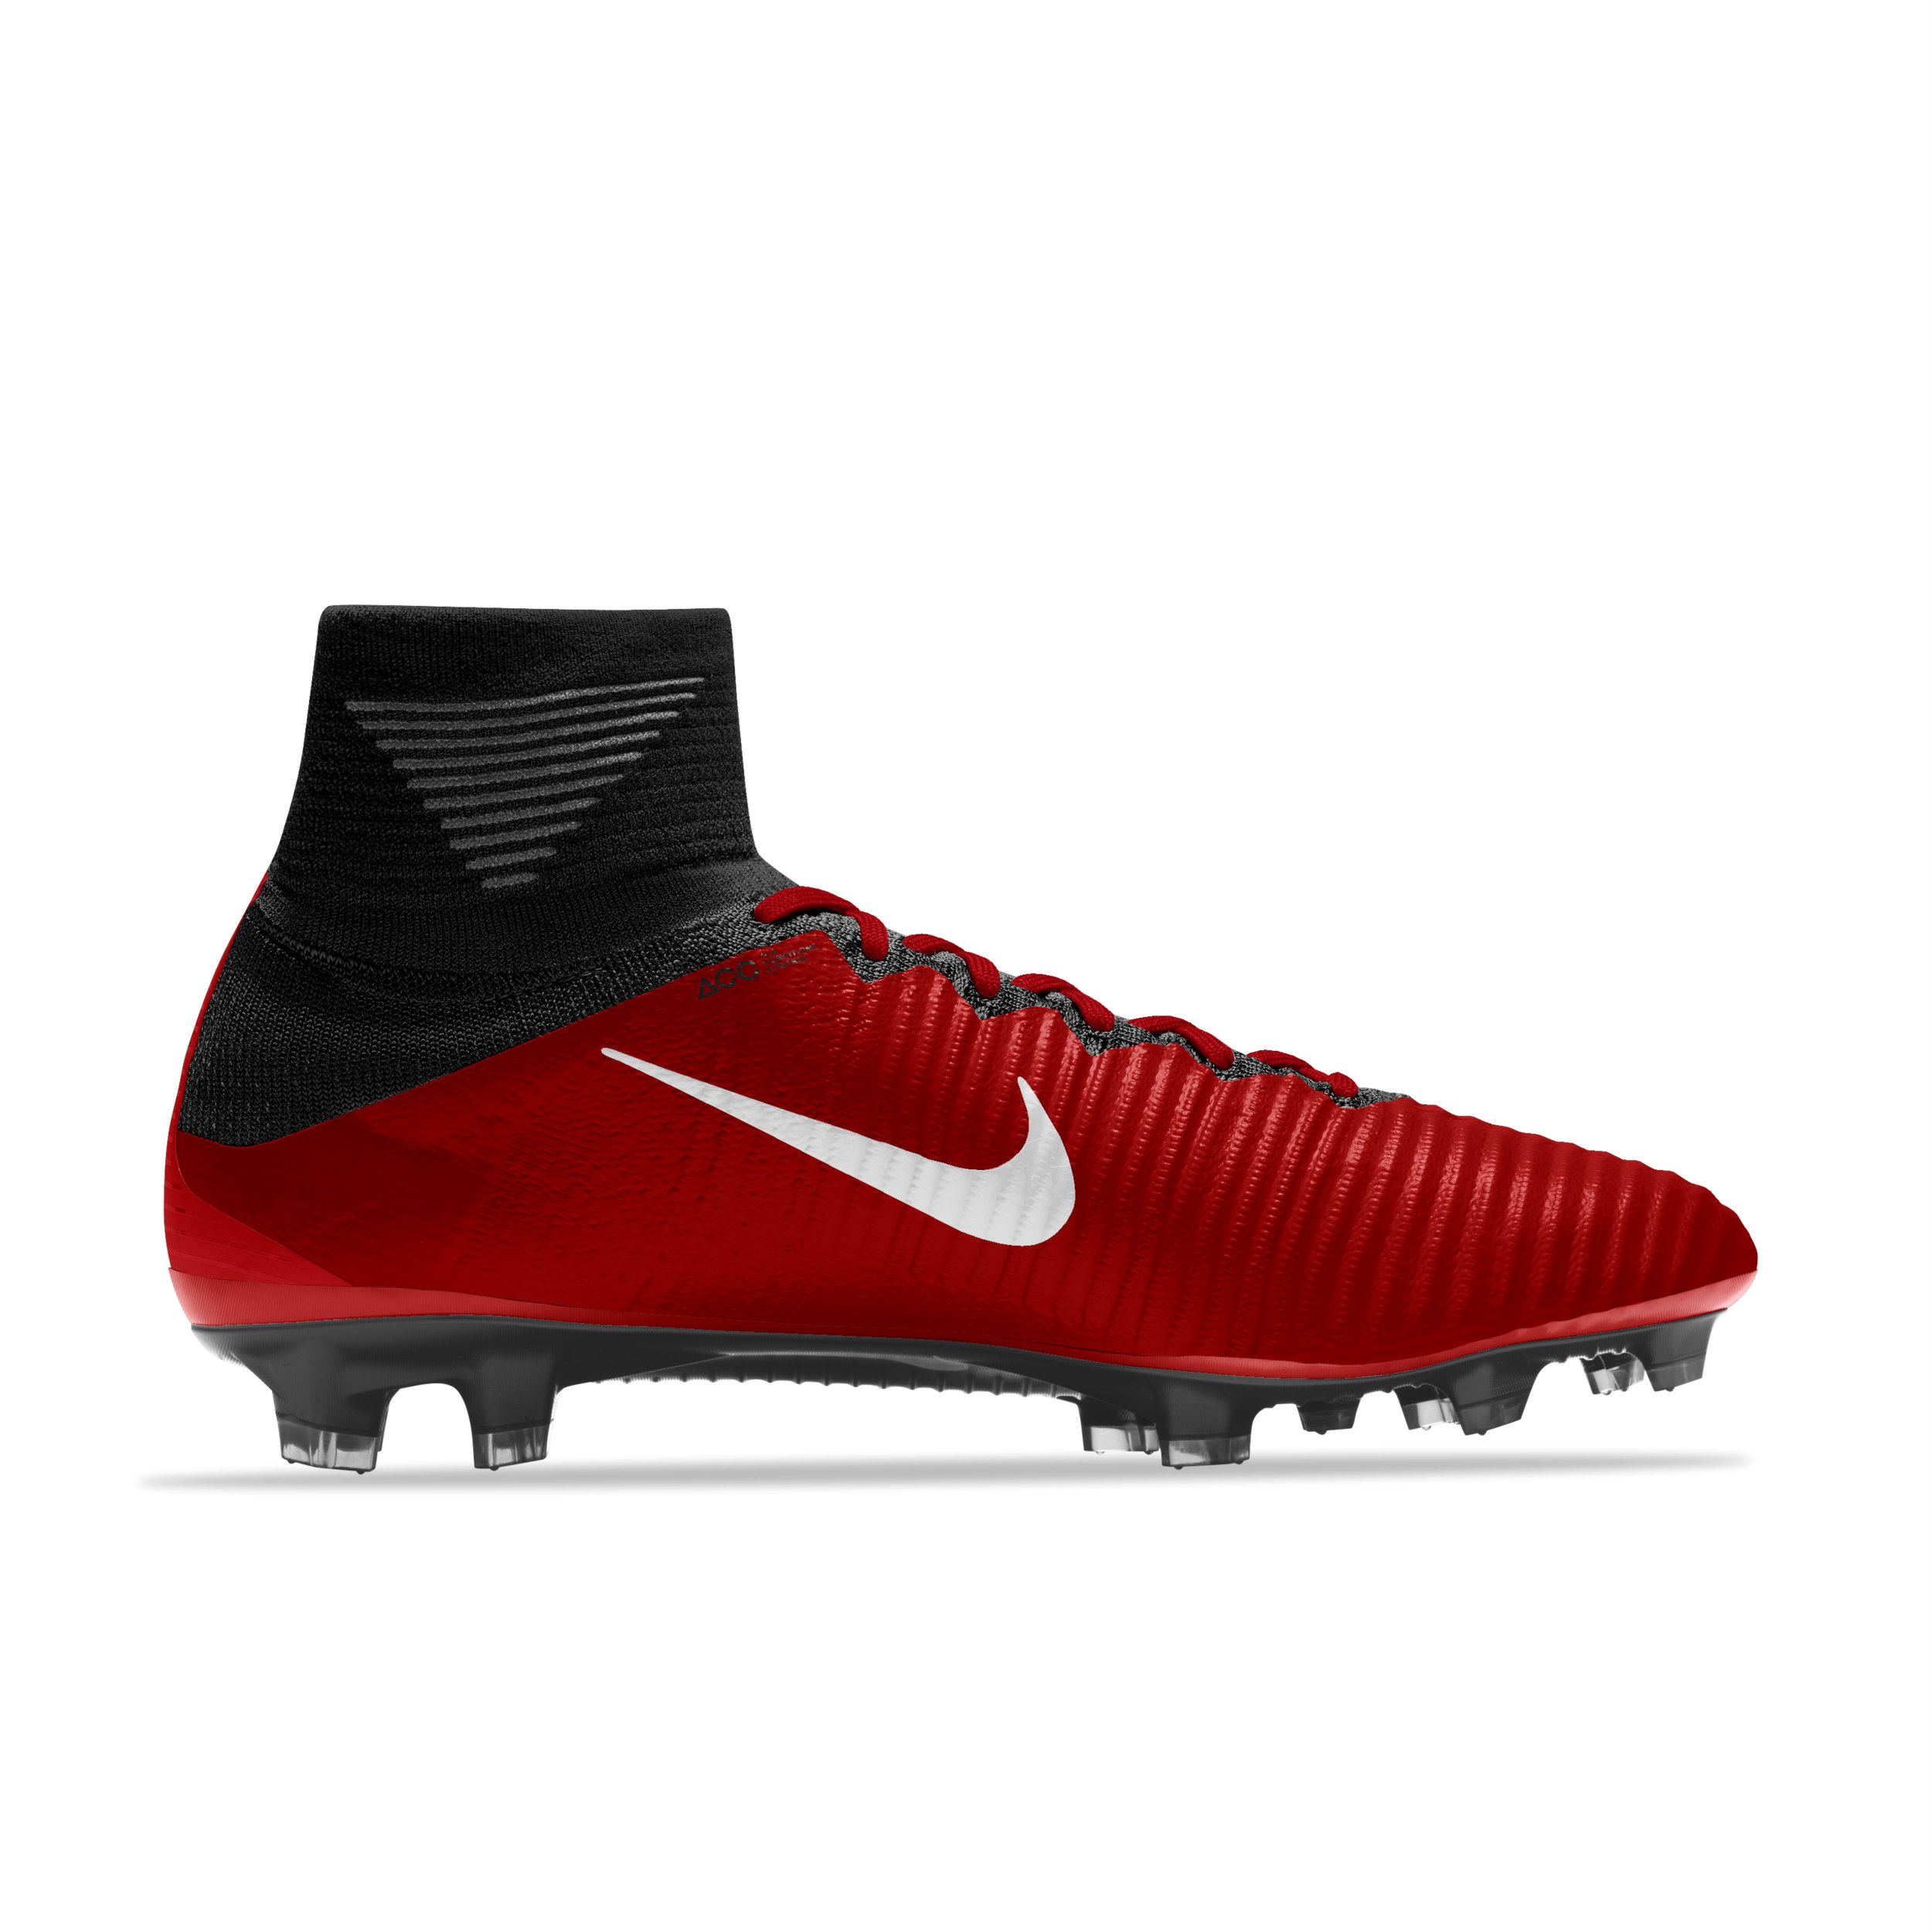 Nike Mercurial Superfly V FG Monaco iD Football Boot - Football boots - Football shirt blog